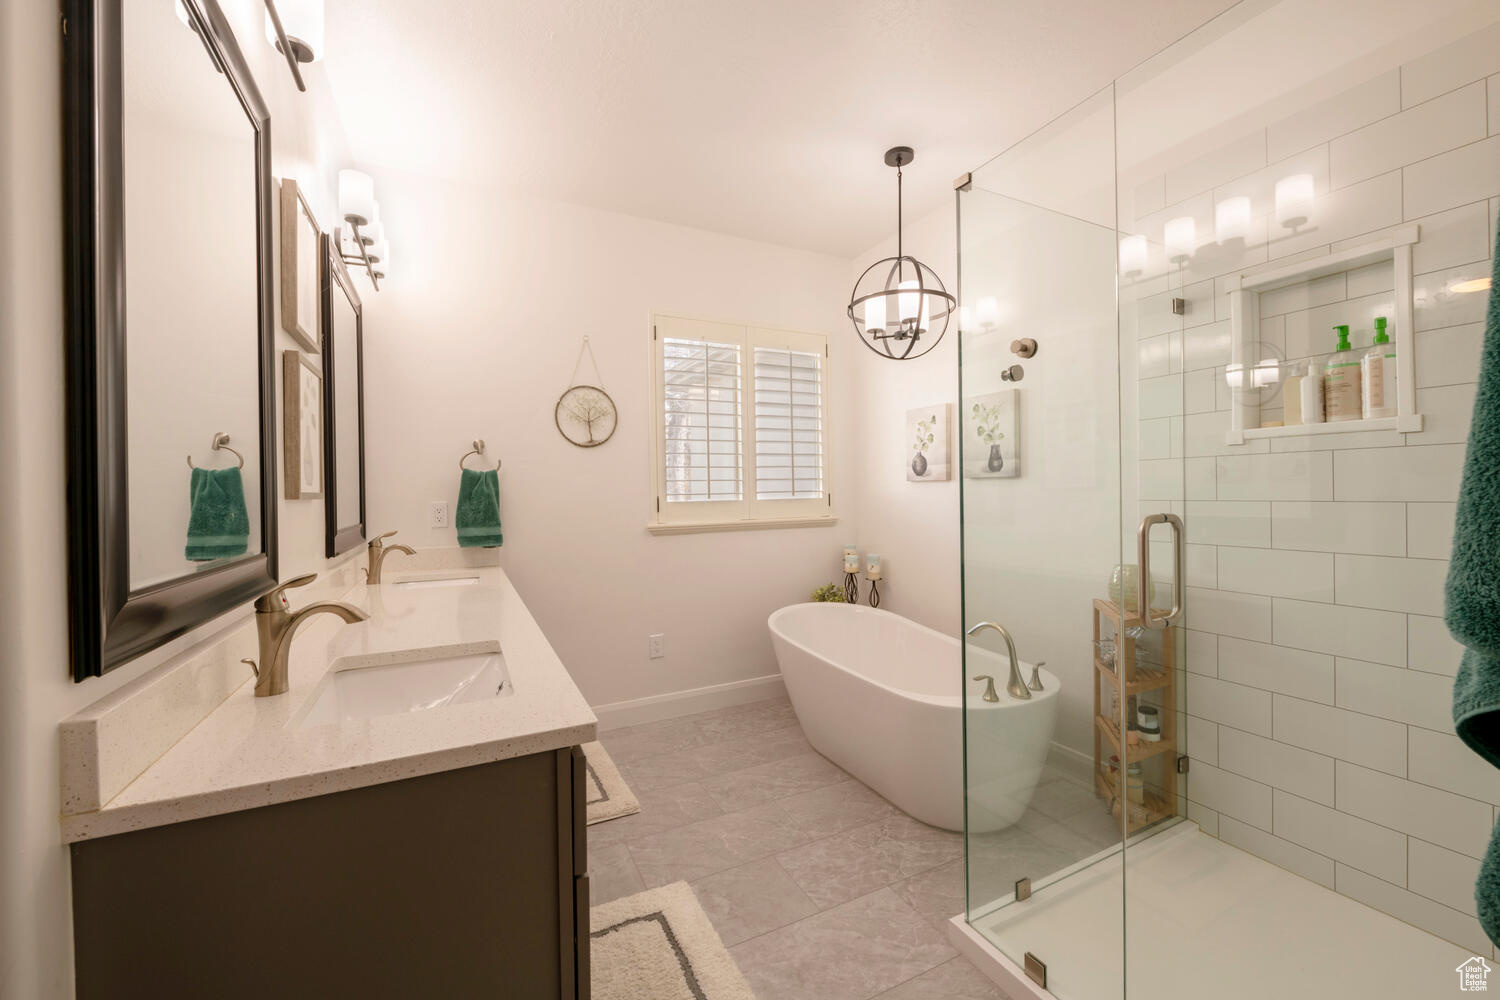 Bathroom with a notable chandelier, plus walk in shower, dual vanity, and tile flooring